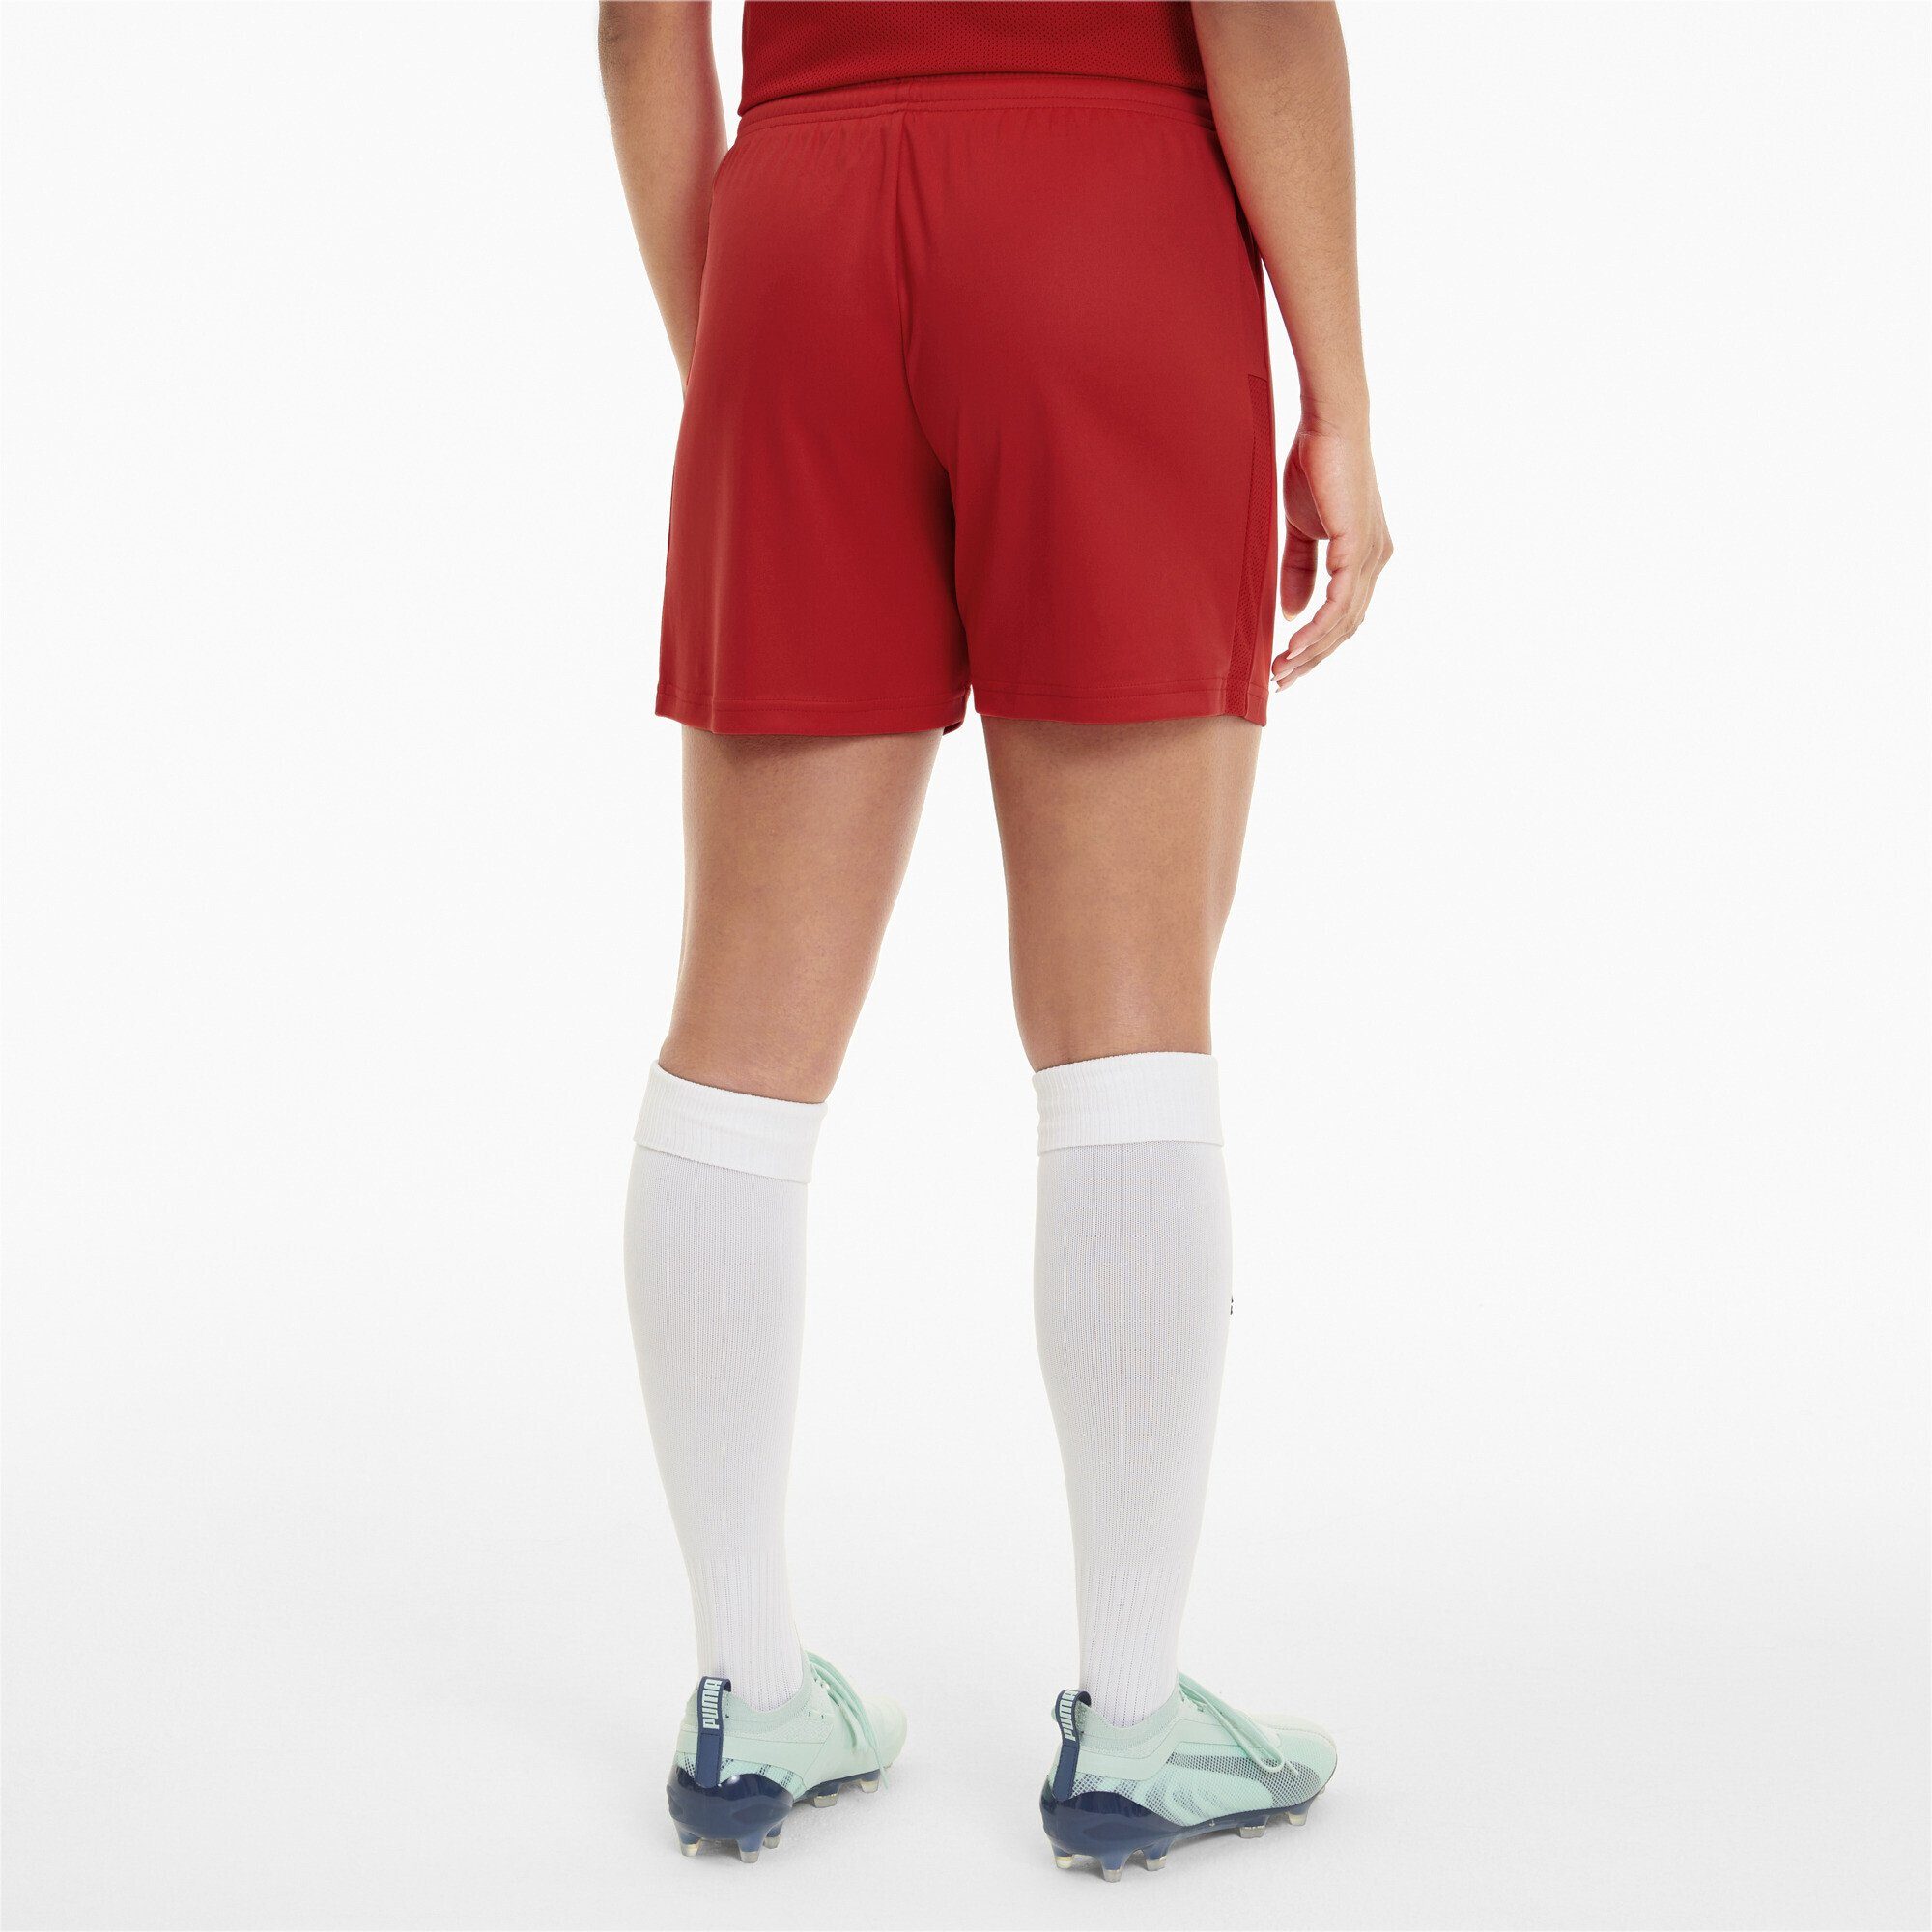 Damen GOAL Gestrickte Red PUMA Sporthose Fußballshorts